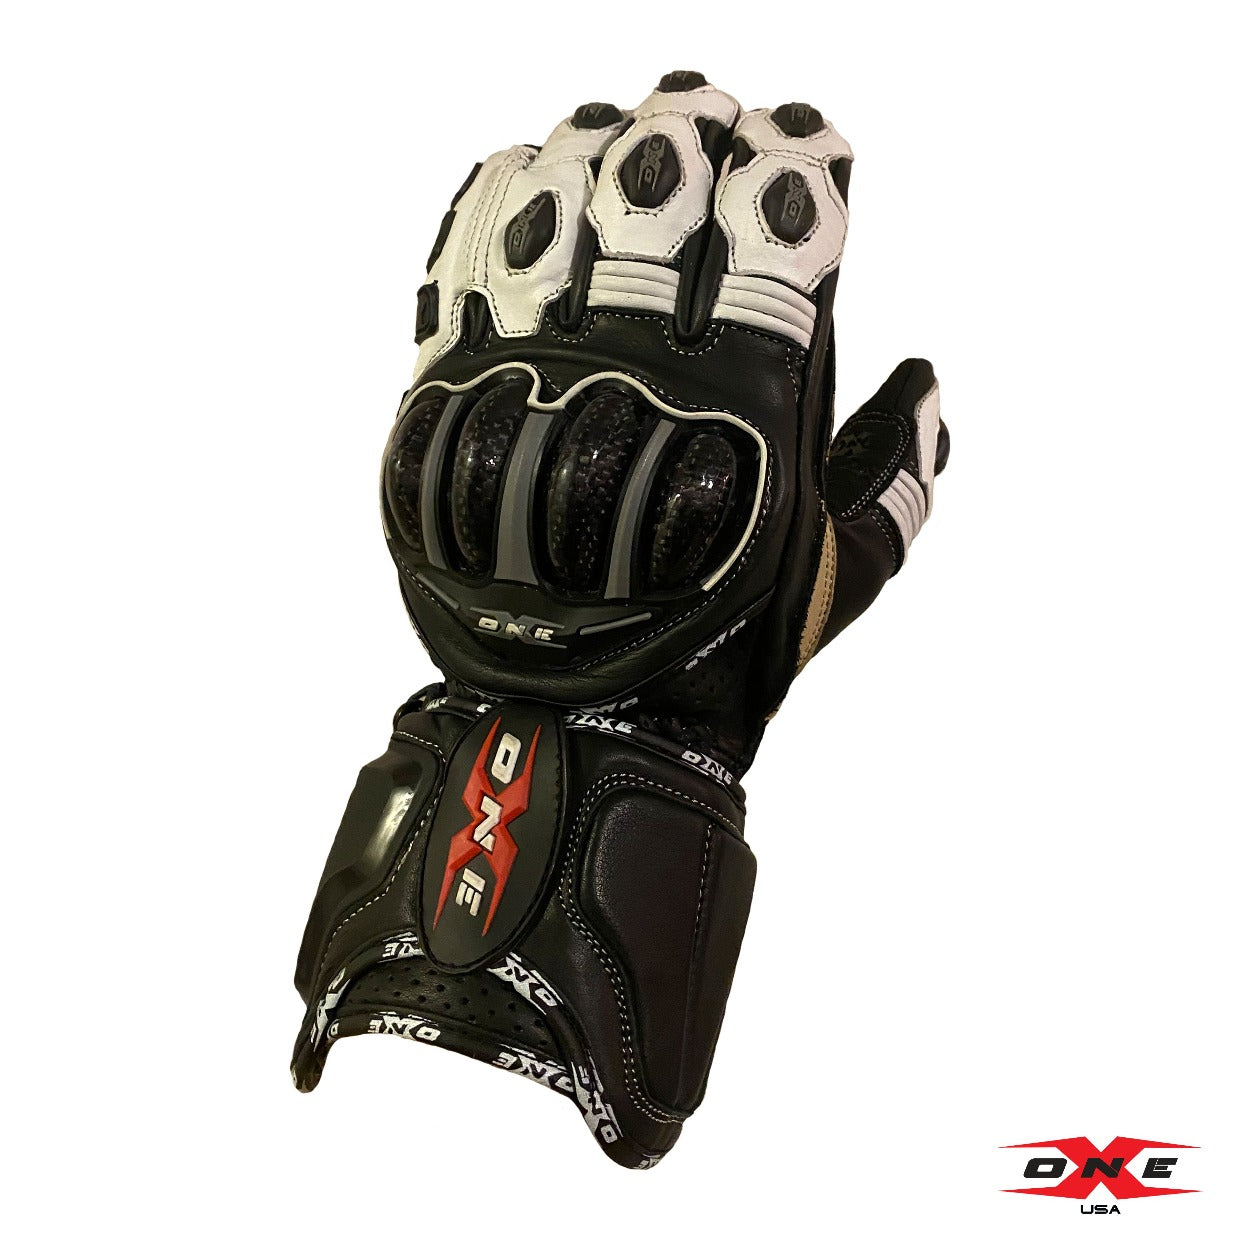 OneX USA Pro Race Gloves - Black / White